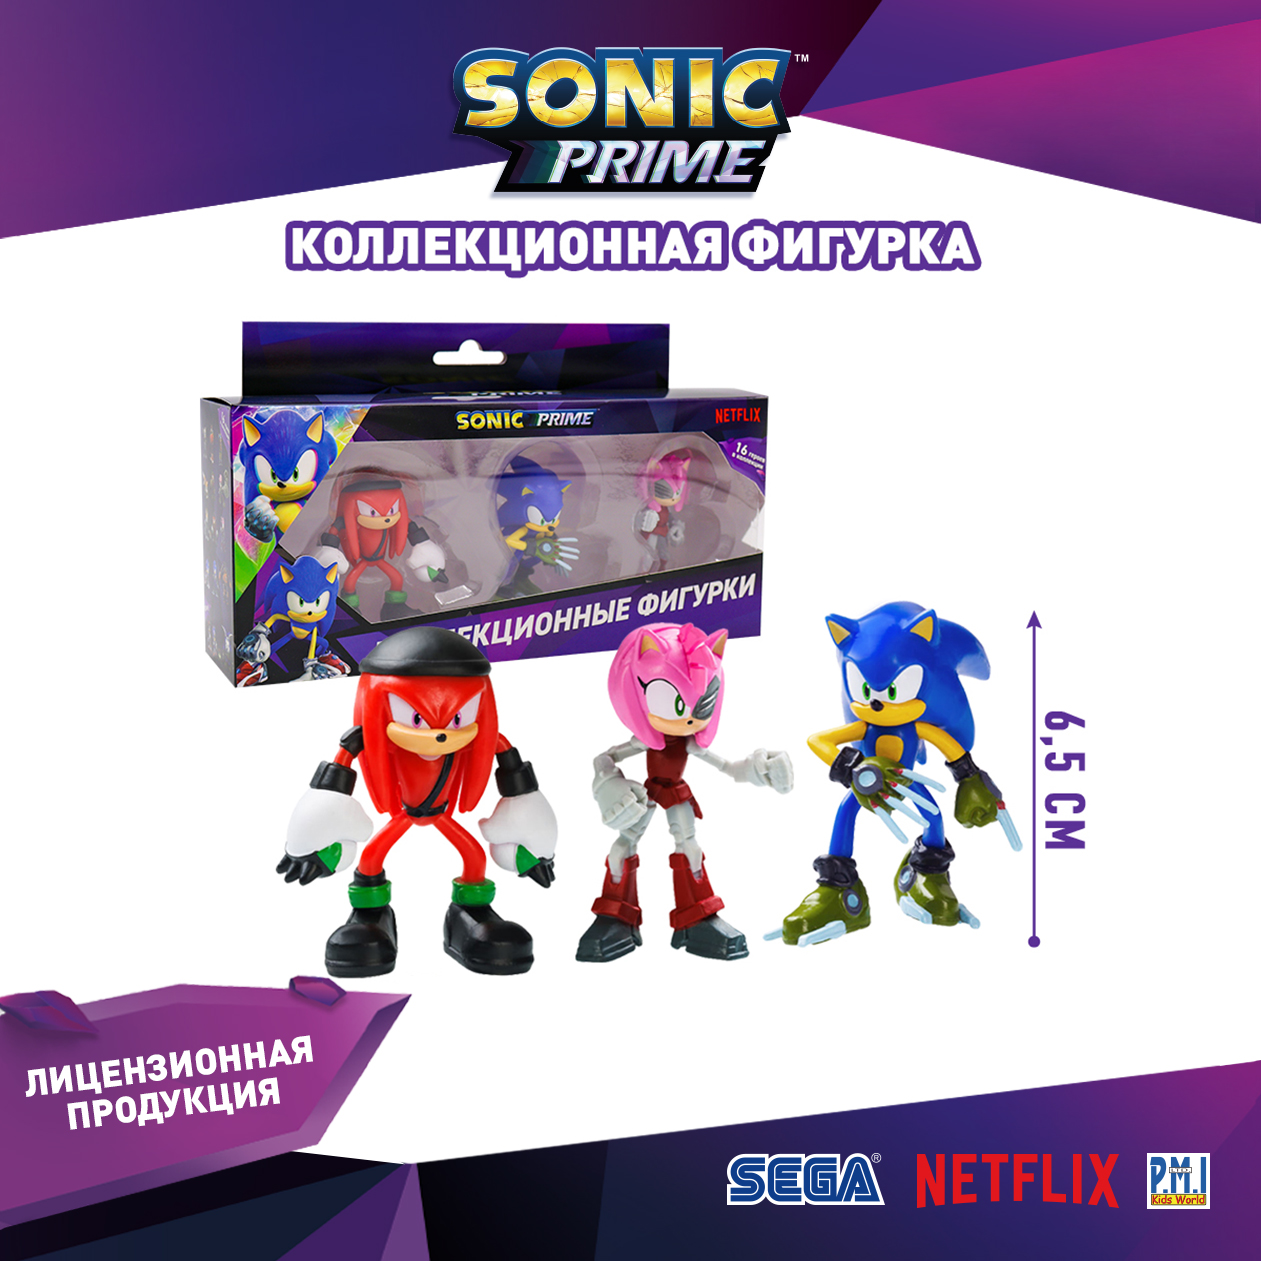 Набор игровой PMI Sonic Prime фигурки 3 шт SON2021-A - фото 7